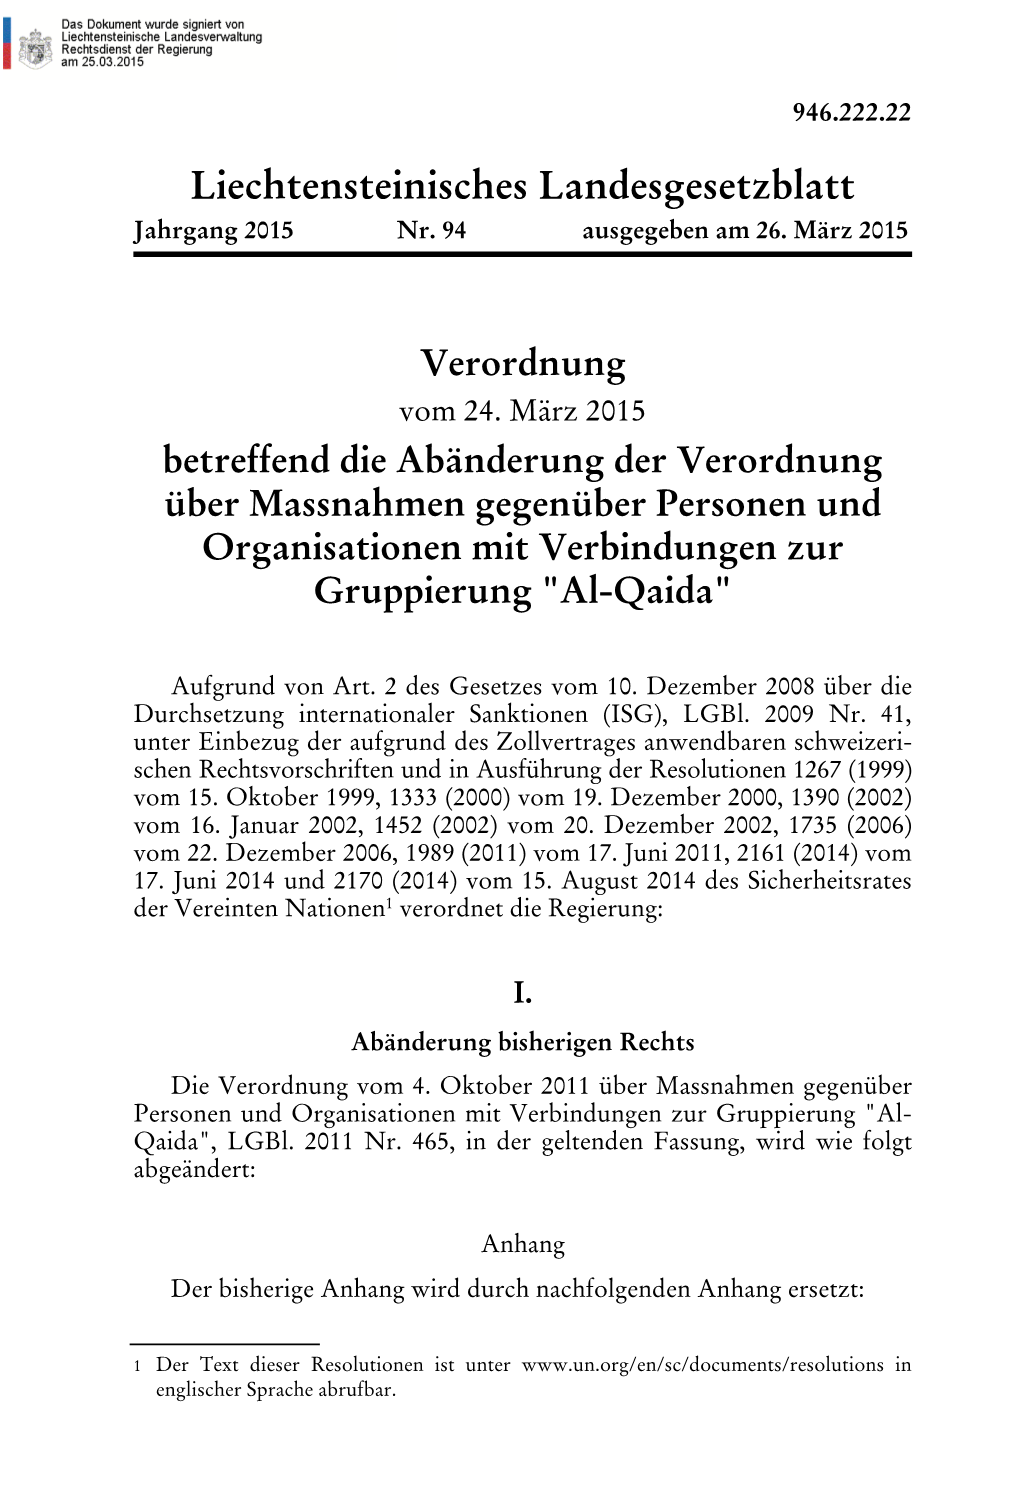 Liechtensteinisches Landesgesetzblatt Jahrgang 2015 Nr